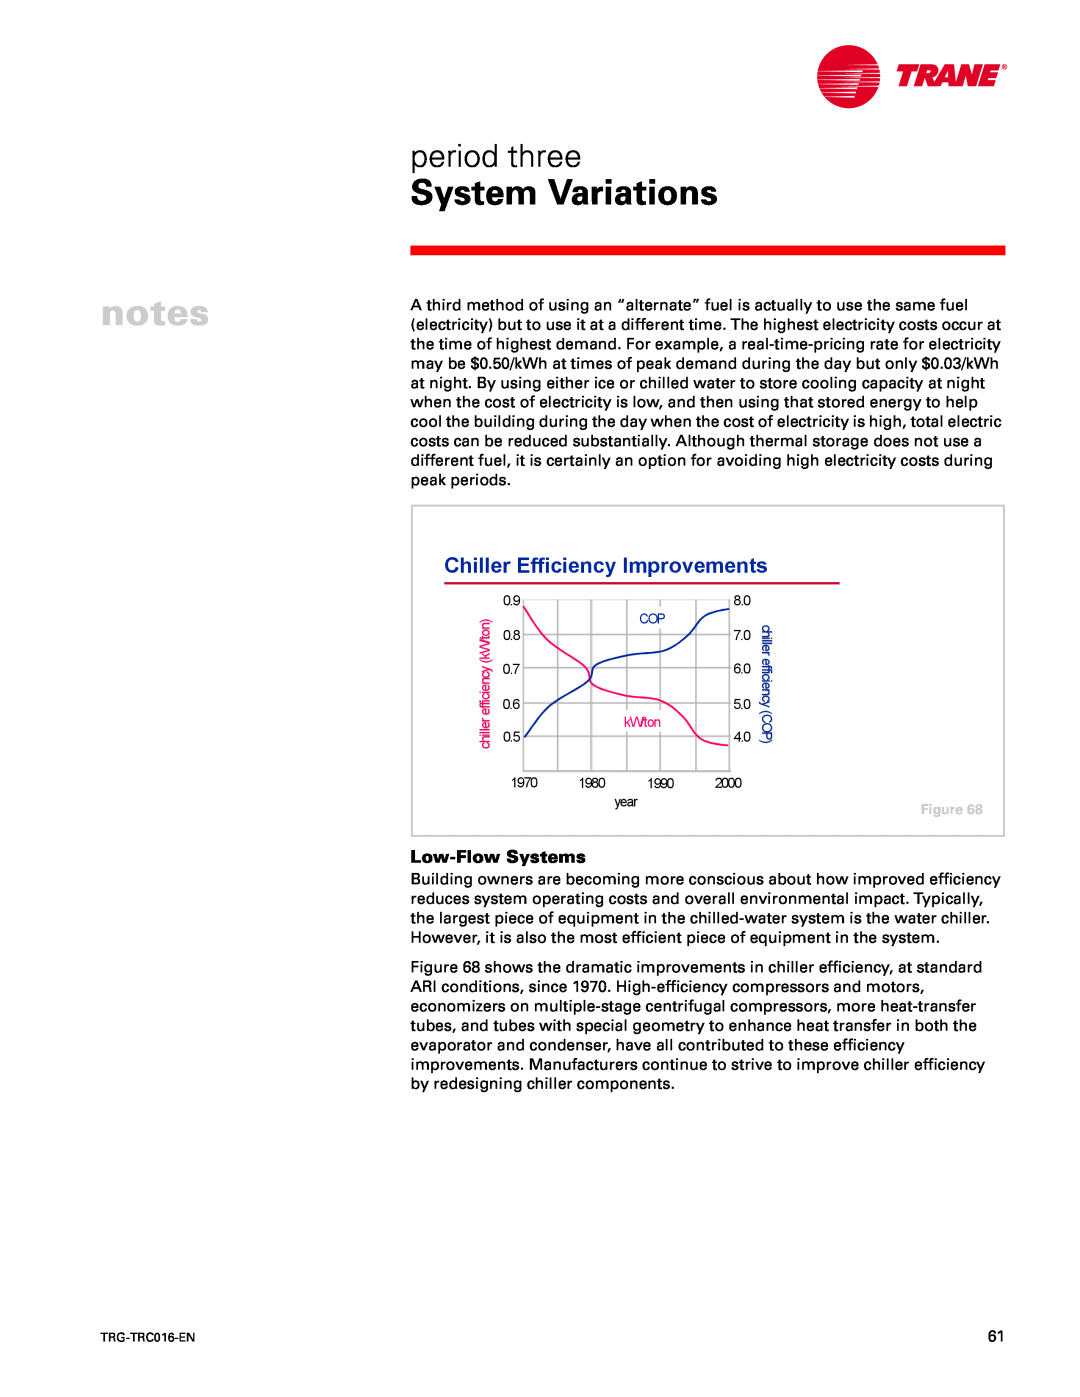 Trane TRG-TRC016-EN manual Chiller Efficiency Improvements, System Variations, period three, Low-FlowSystems 